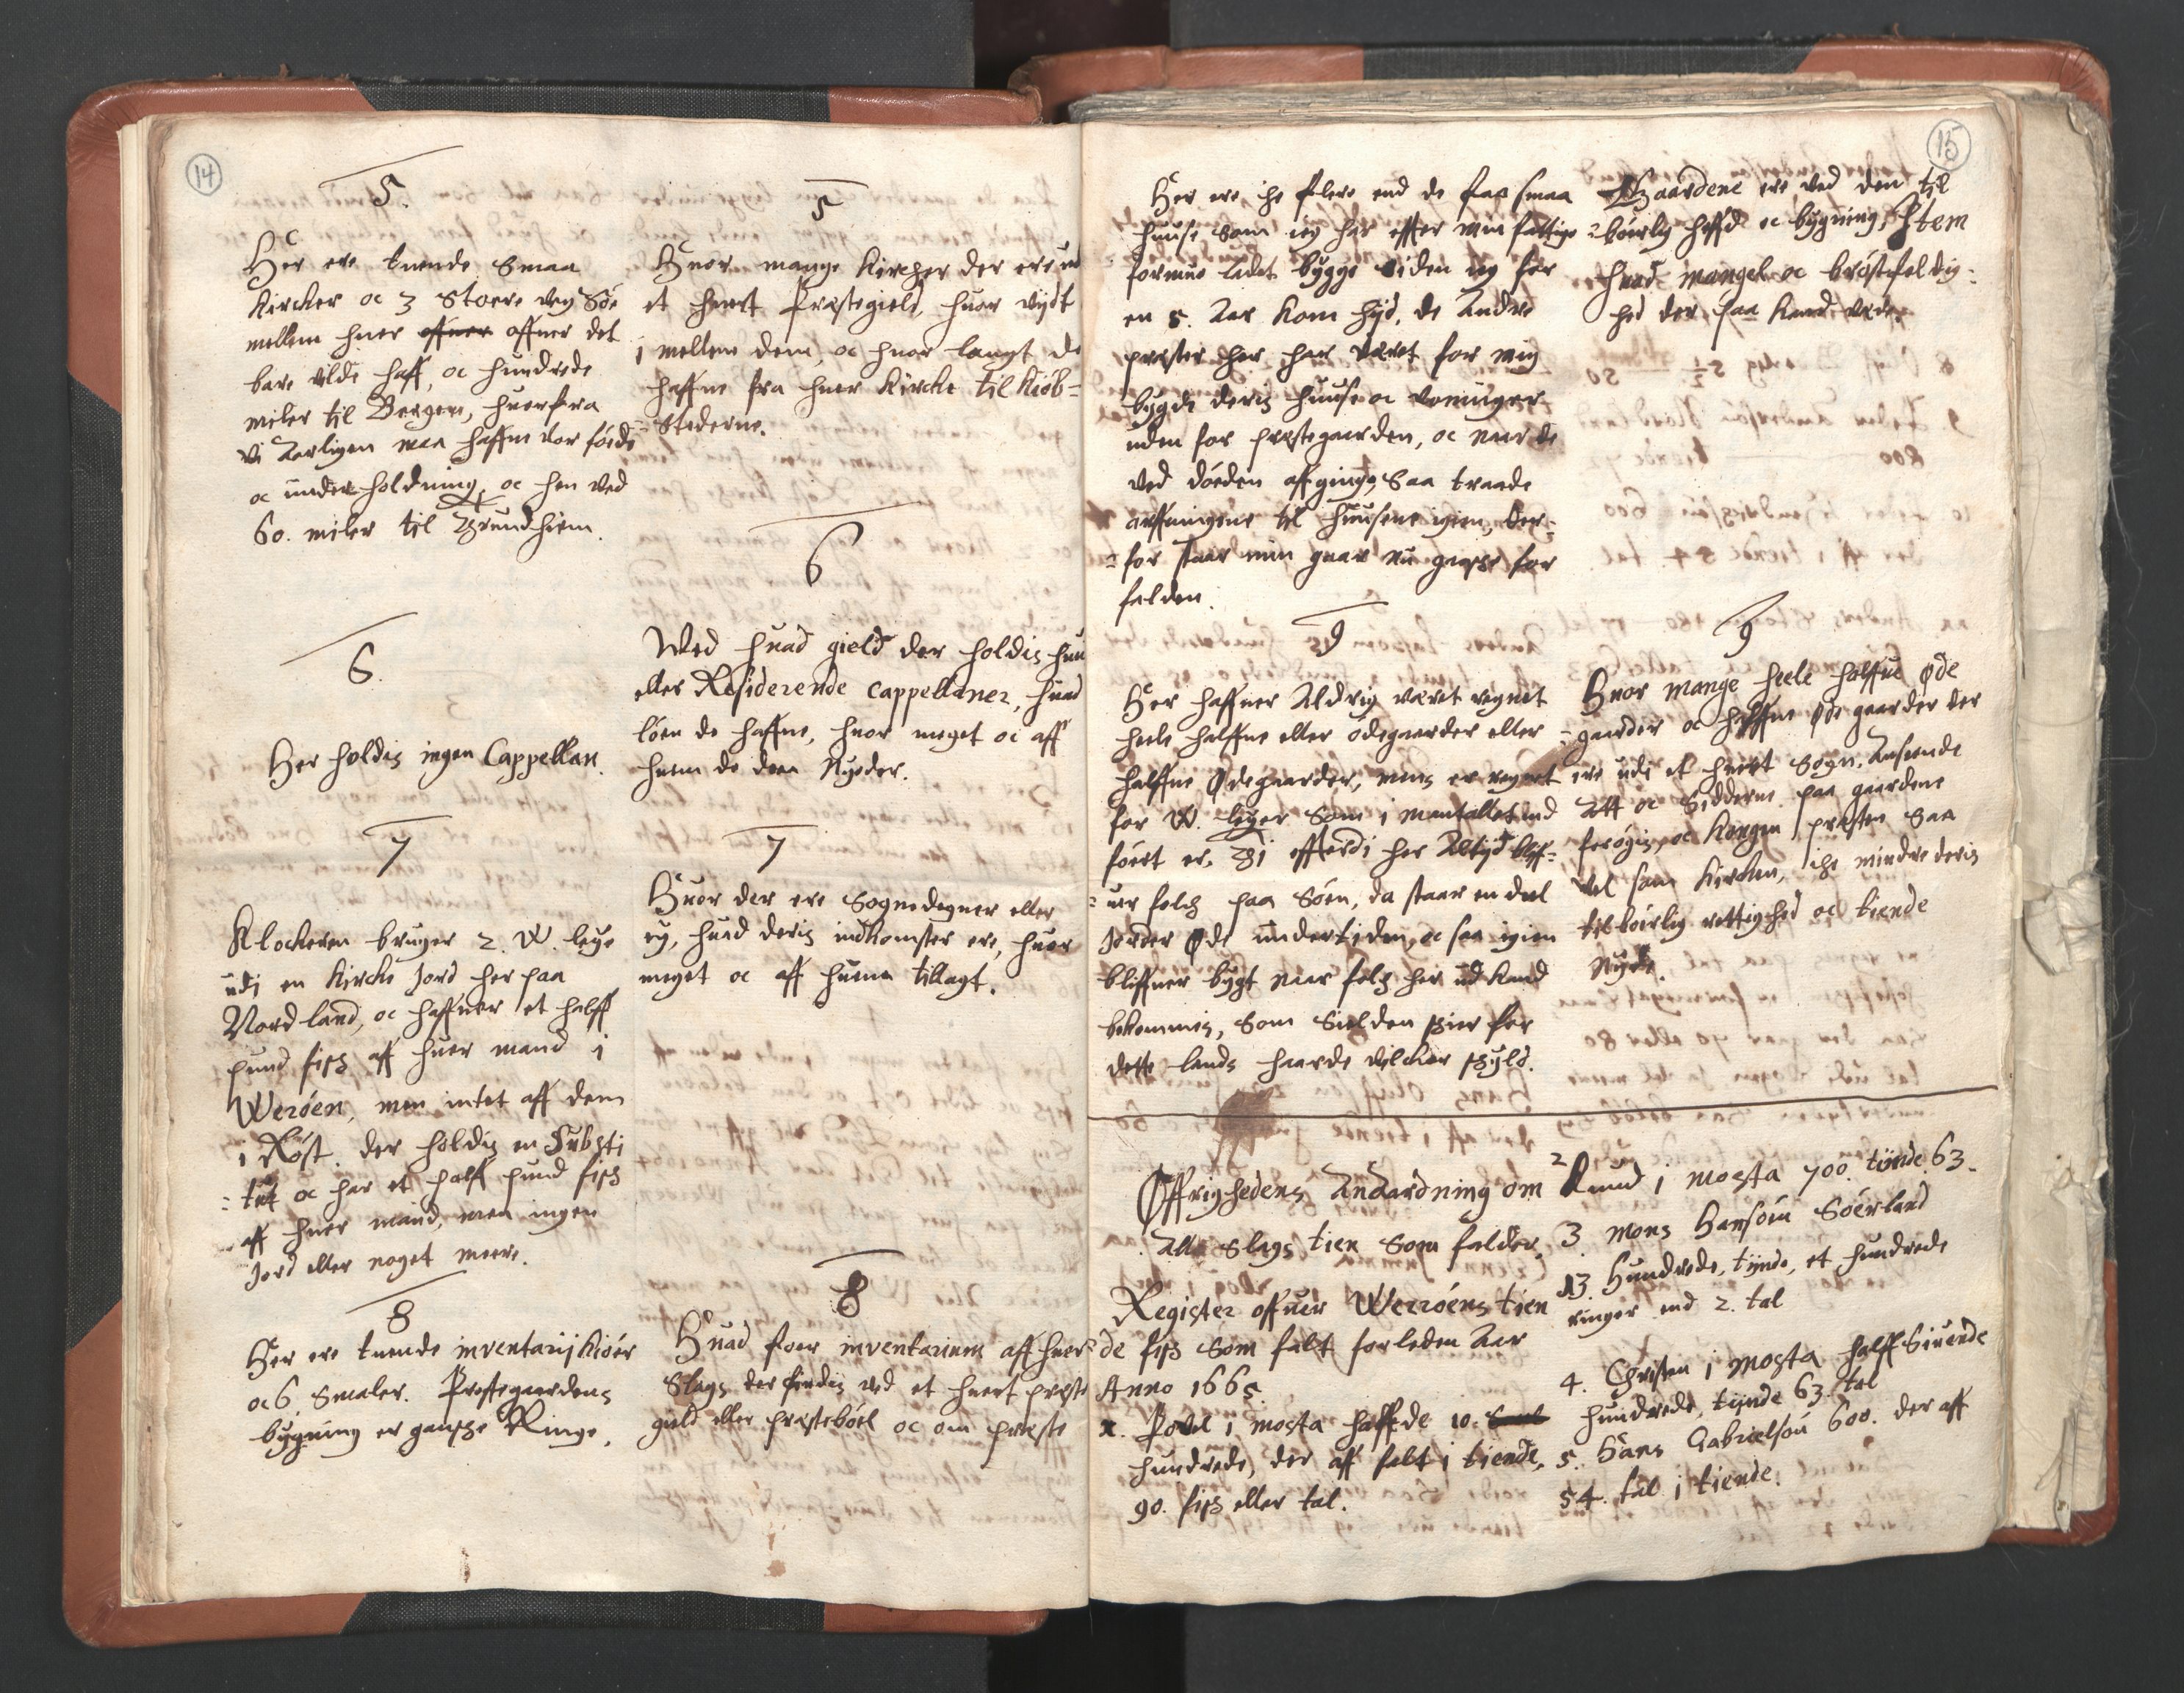 RA, Vicar's Census 1664-1666, no. 36: Lofoten and Vesterålen deanery, Senja deanery and Troms deanery, 1664-1666, p. 14-15